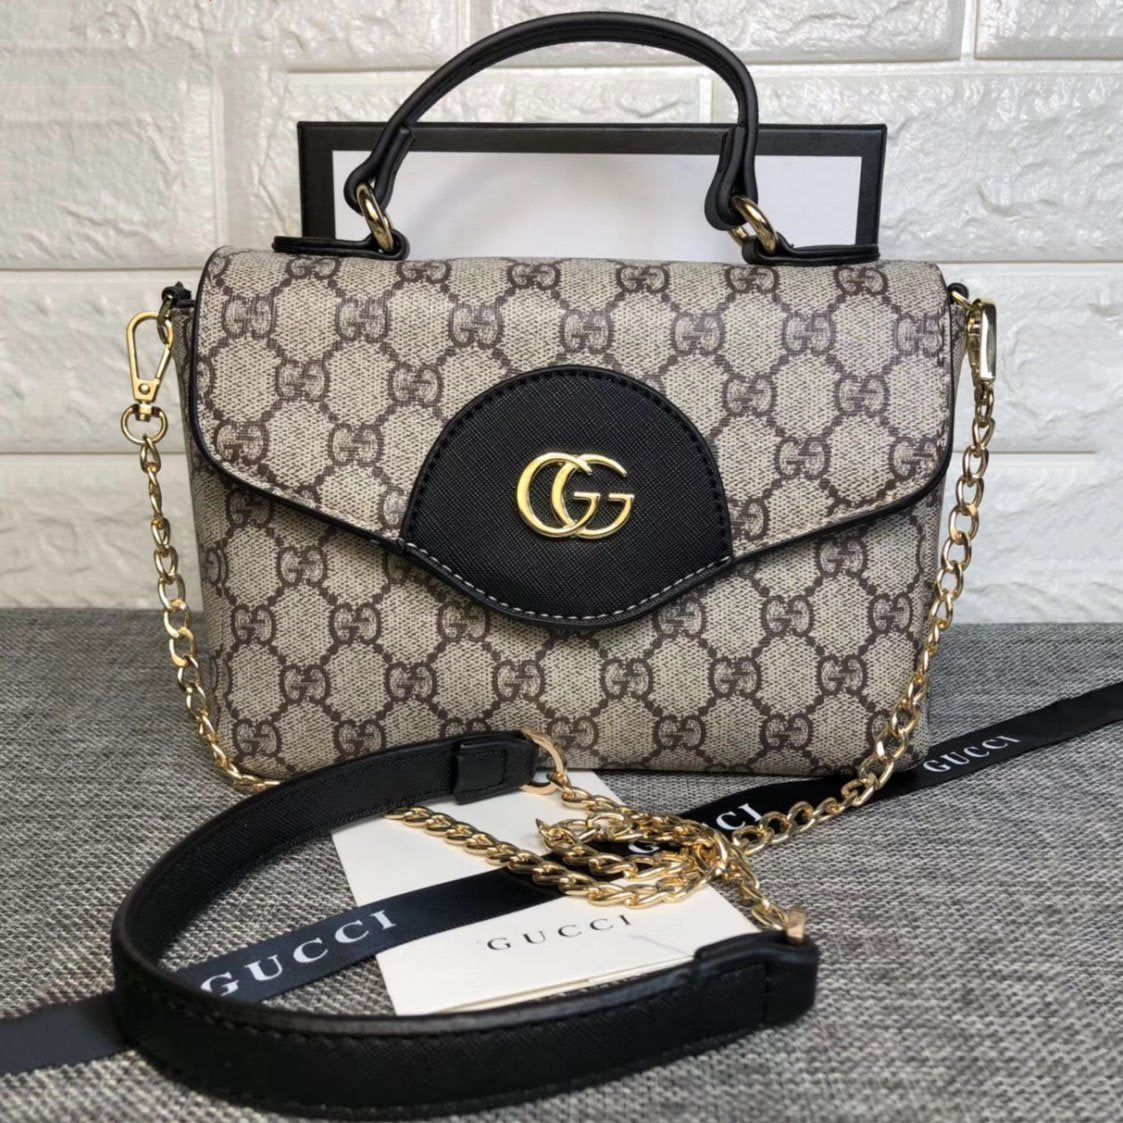 GG Women Fashion Leather Chain Satchel Shoulder Bag Handbag Crossbody